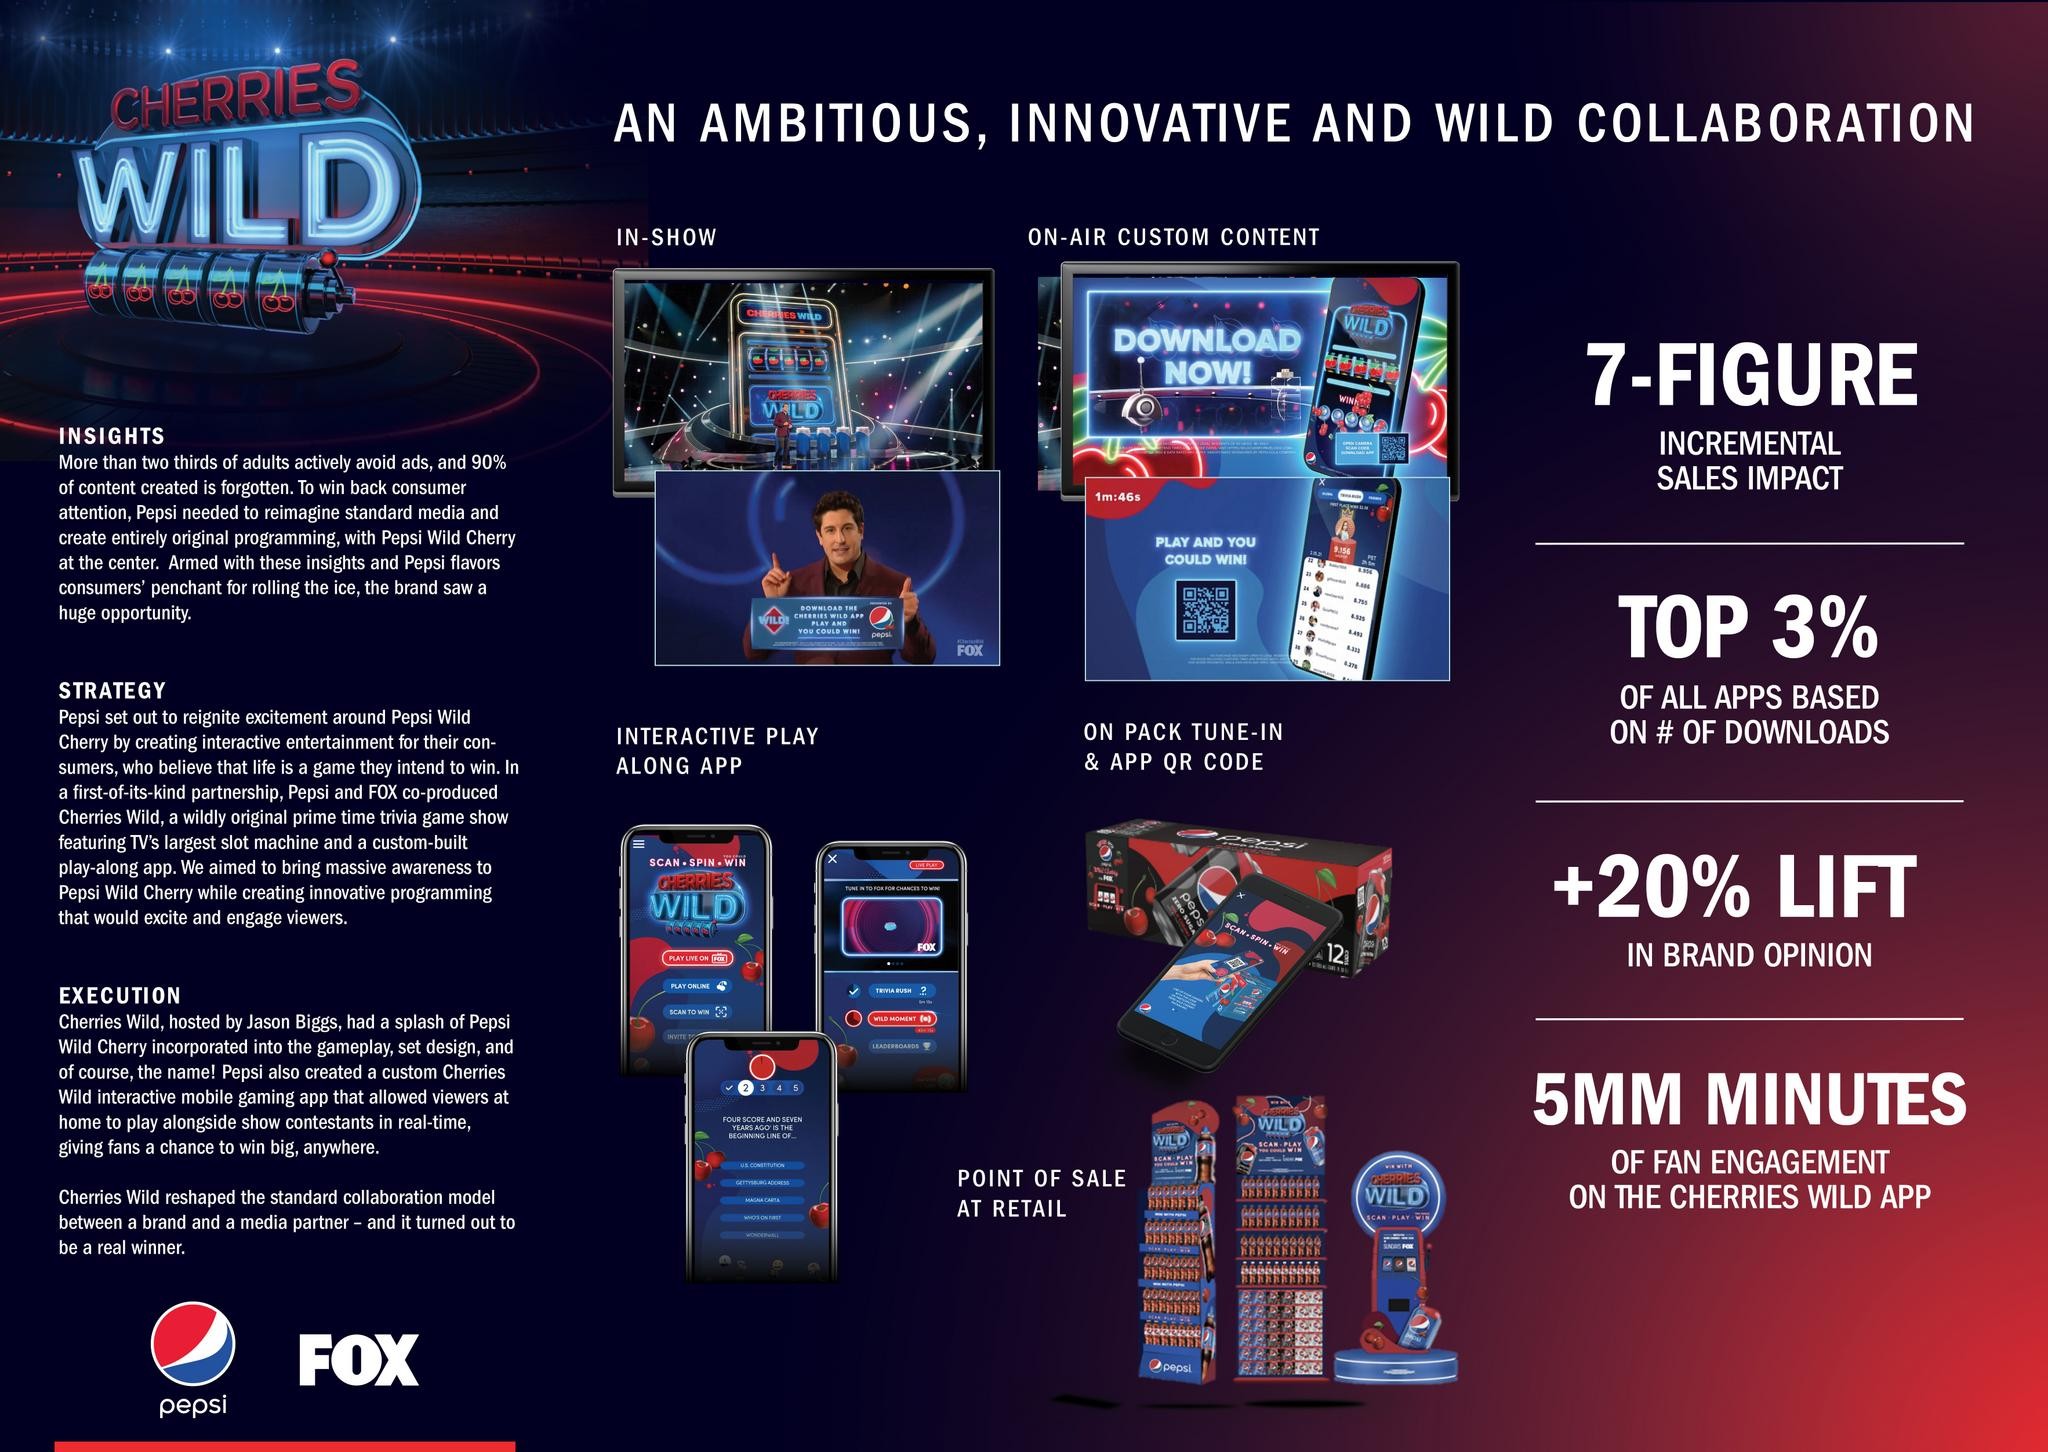 Cherries Wild: A FOX Entertainment & Pepsi Collaboration